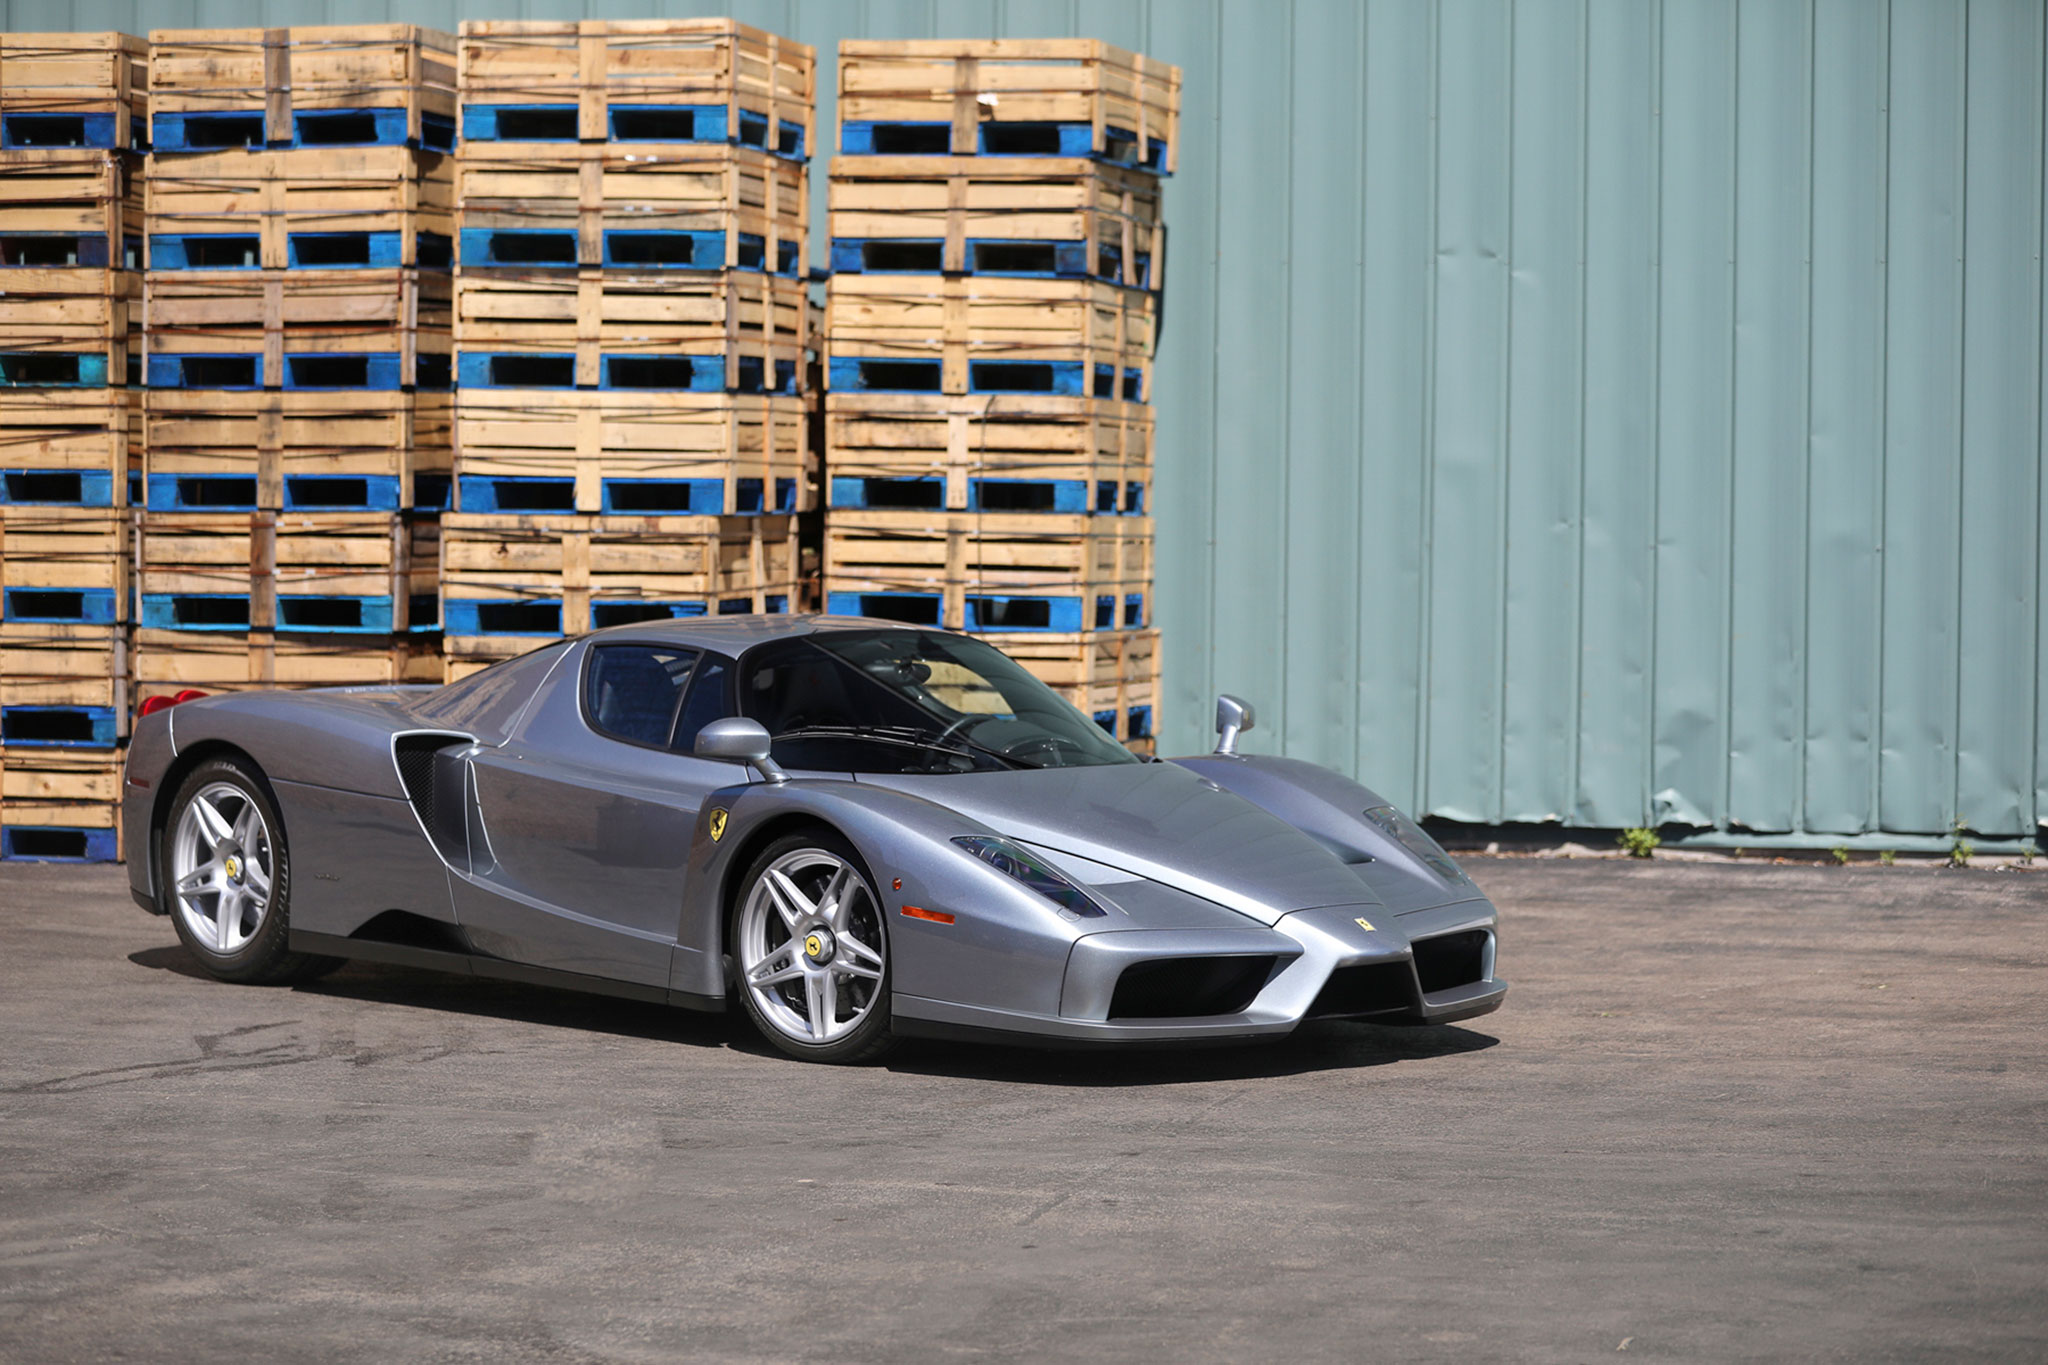 2004 Ferrari Enzo - estimation $US 3.5 à 4 millions - Pebble Beach Gooding & Company.